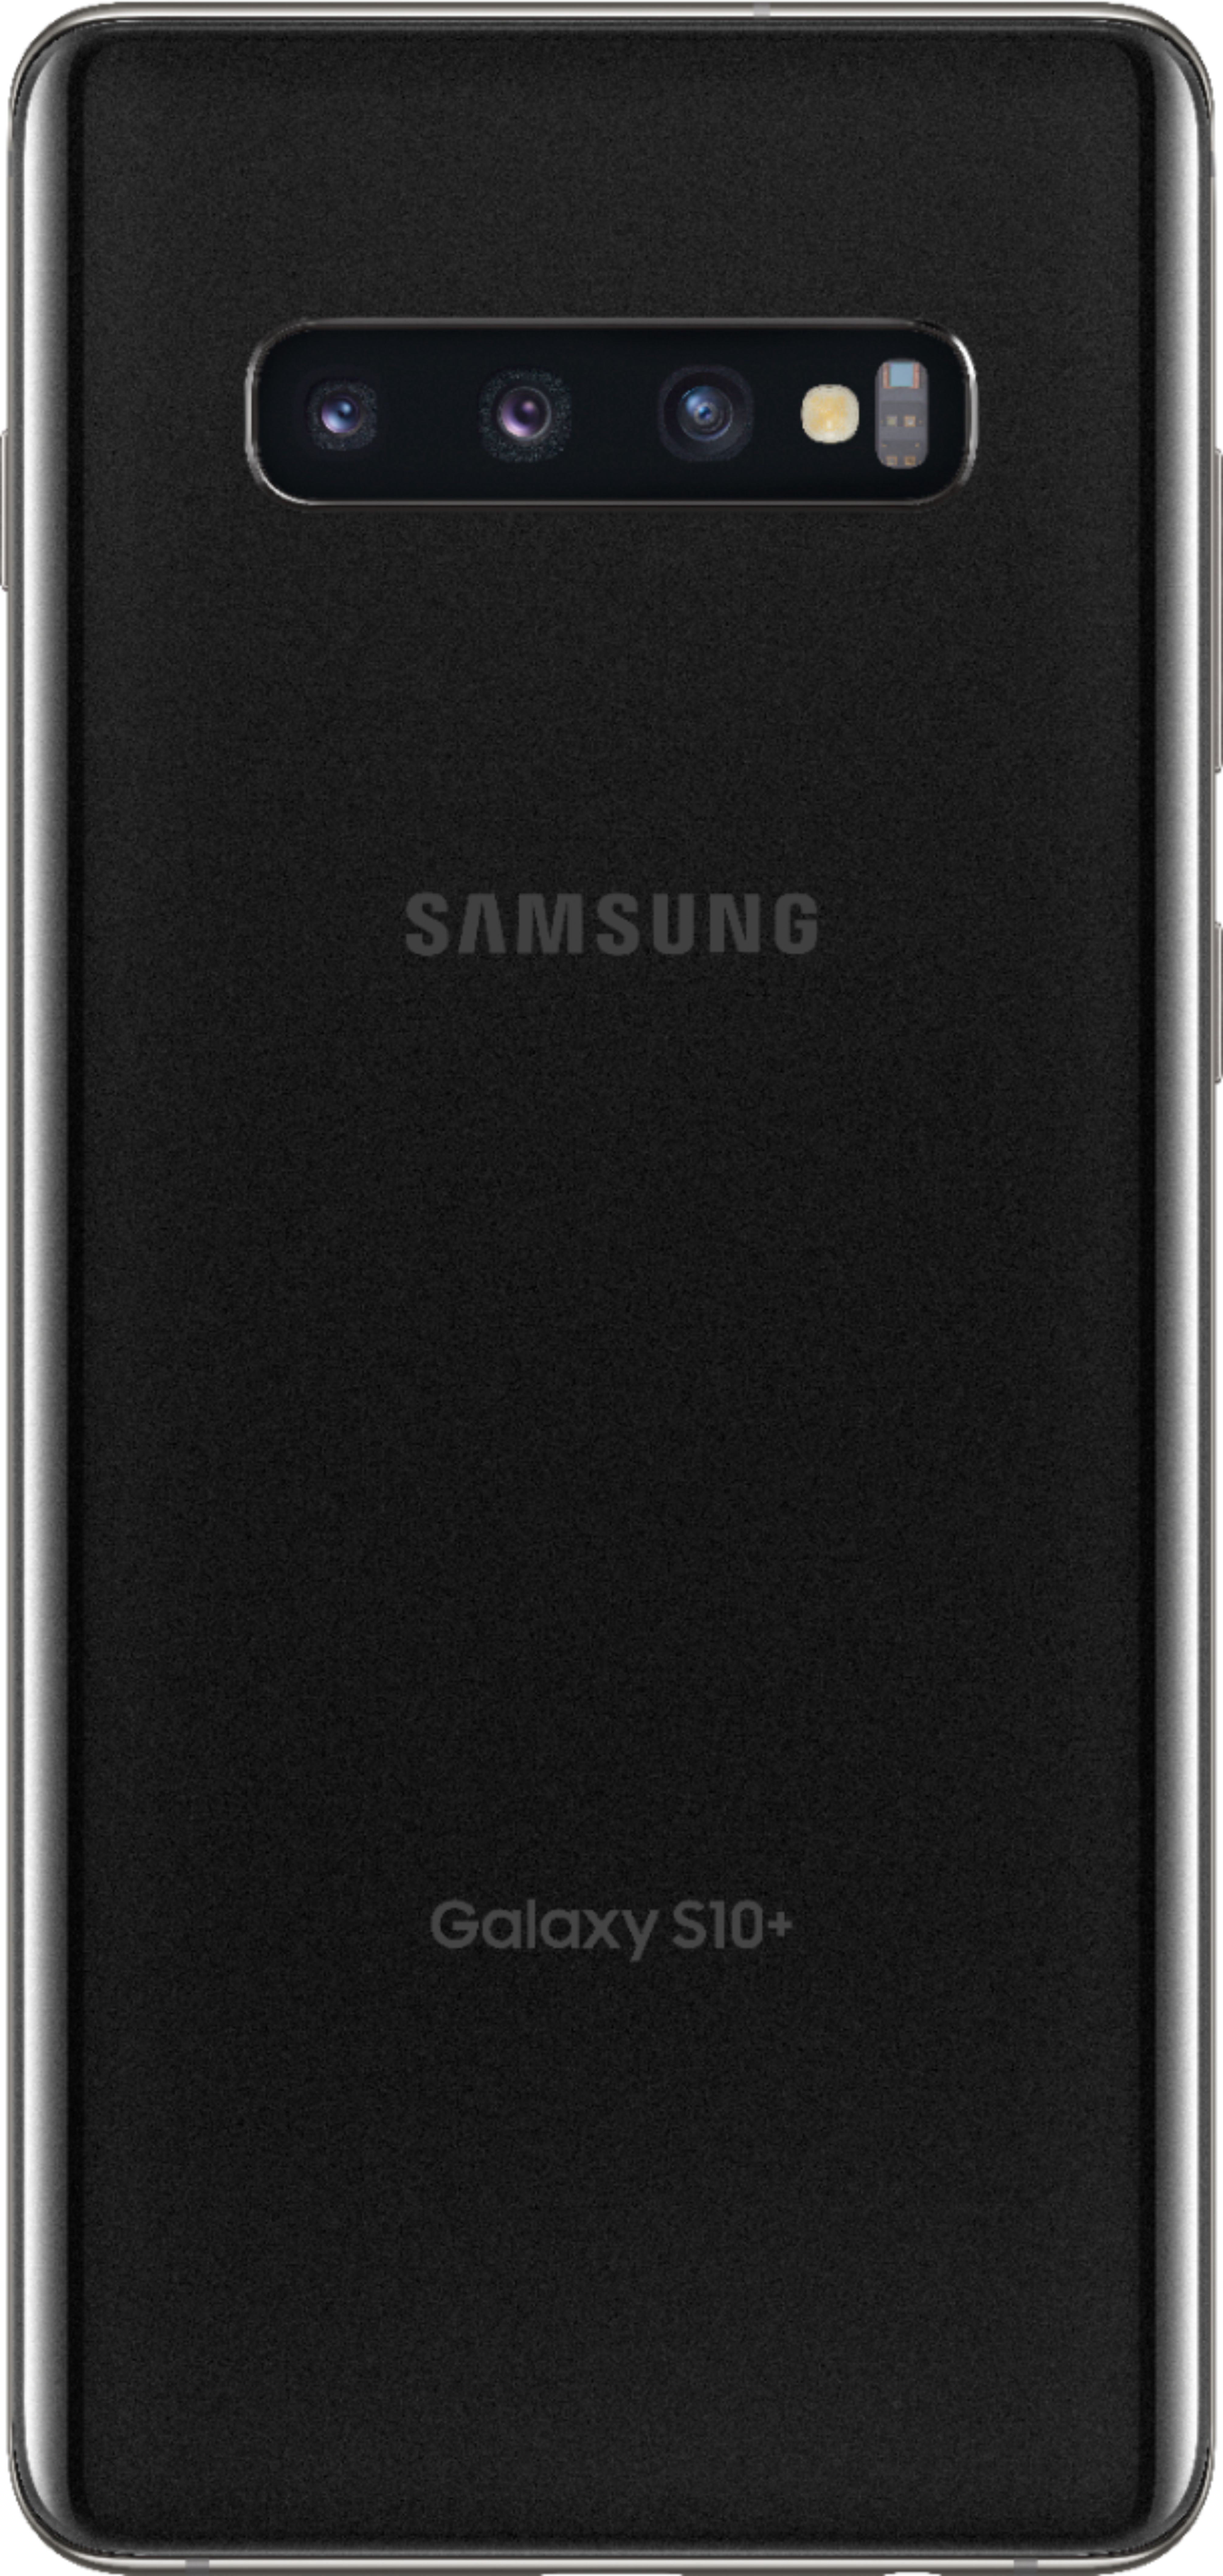 Back View: Samsung Galaxy S10+ 128GB, Prism Black